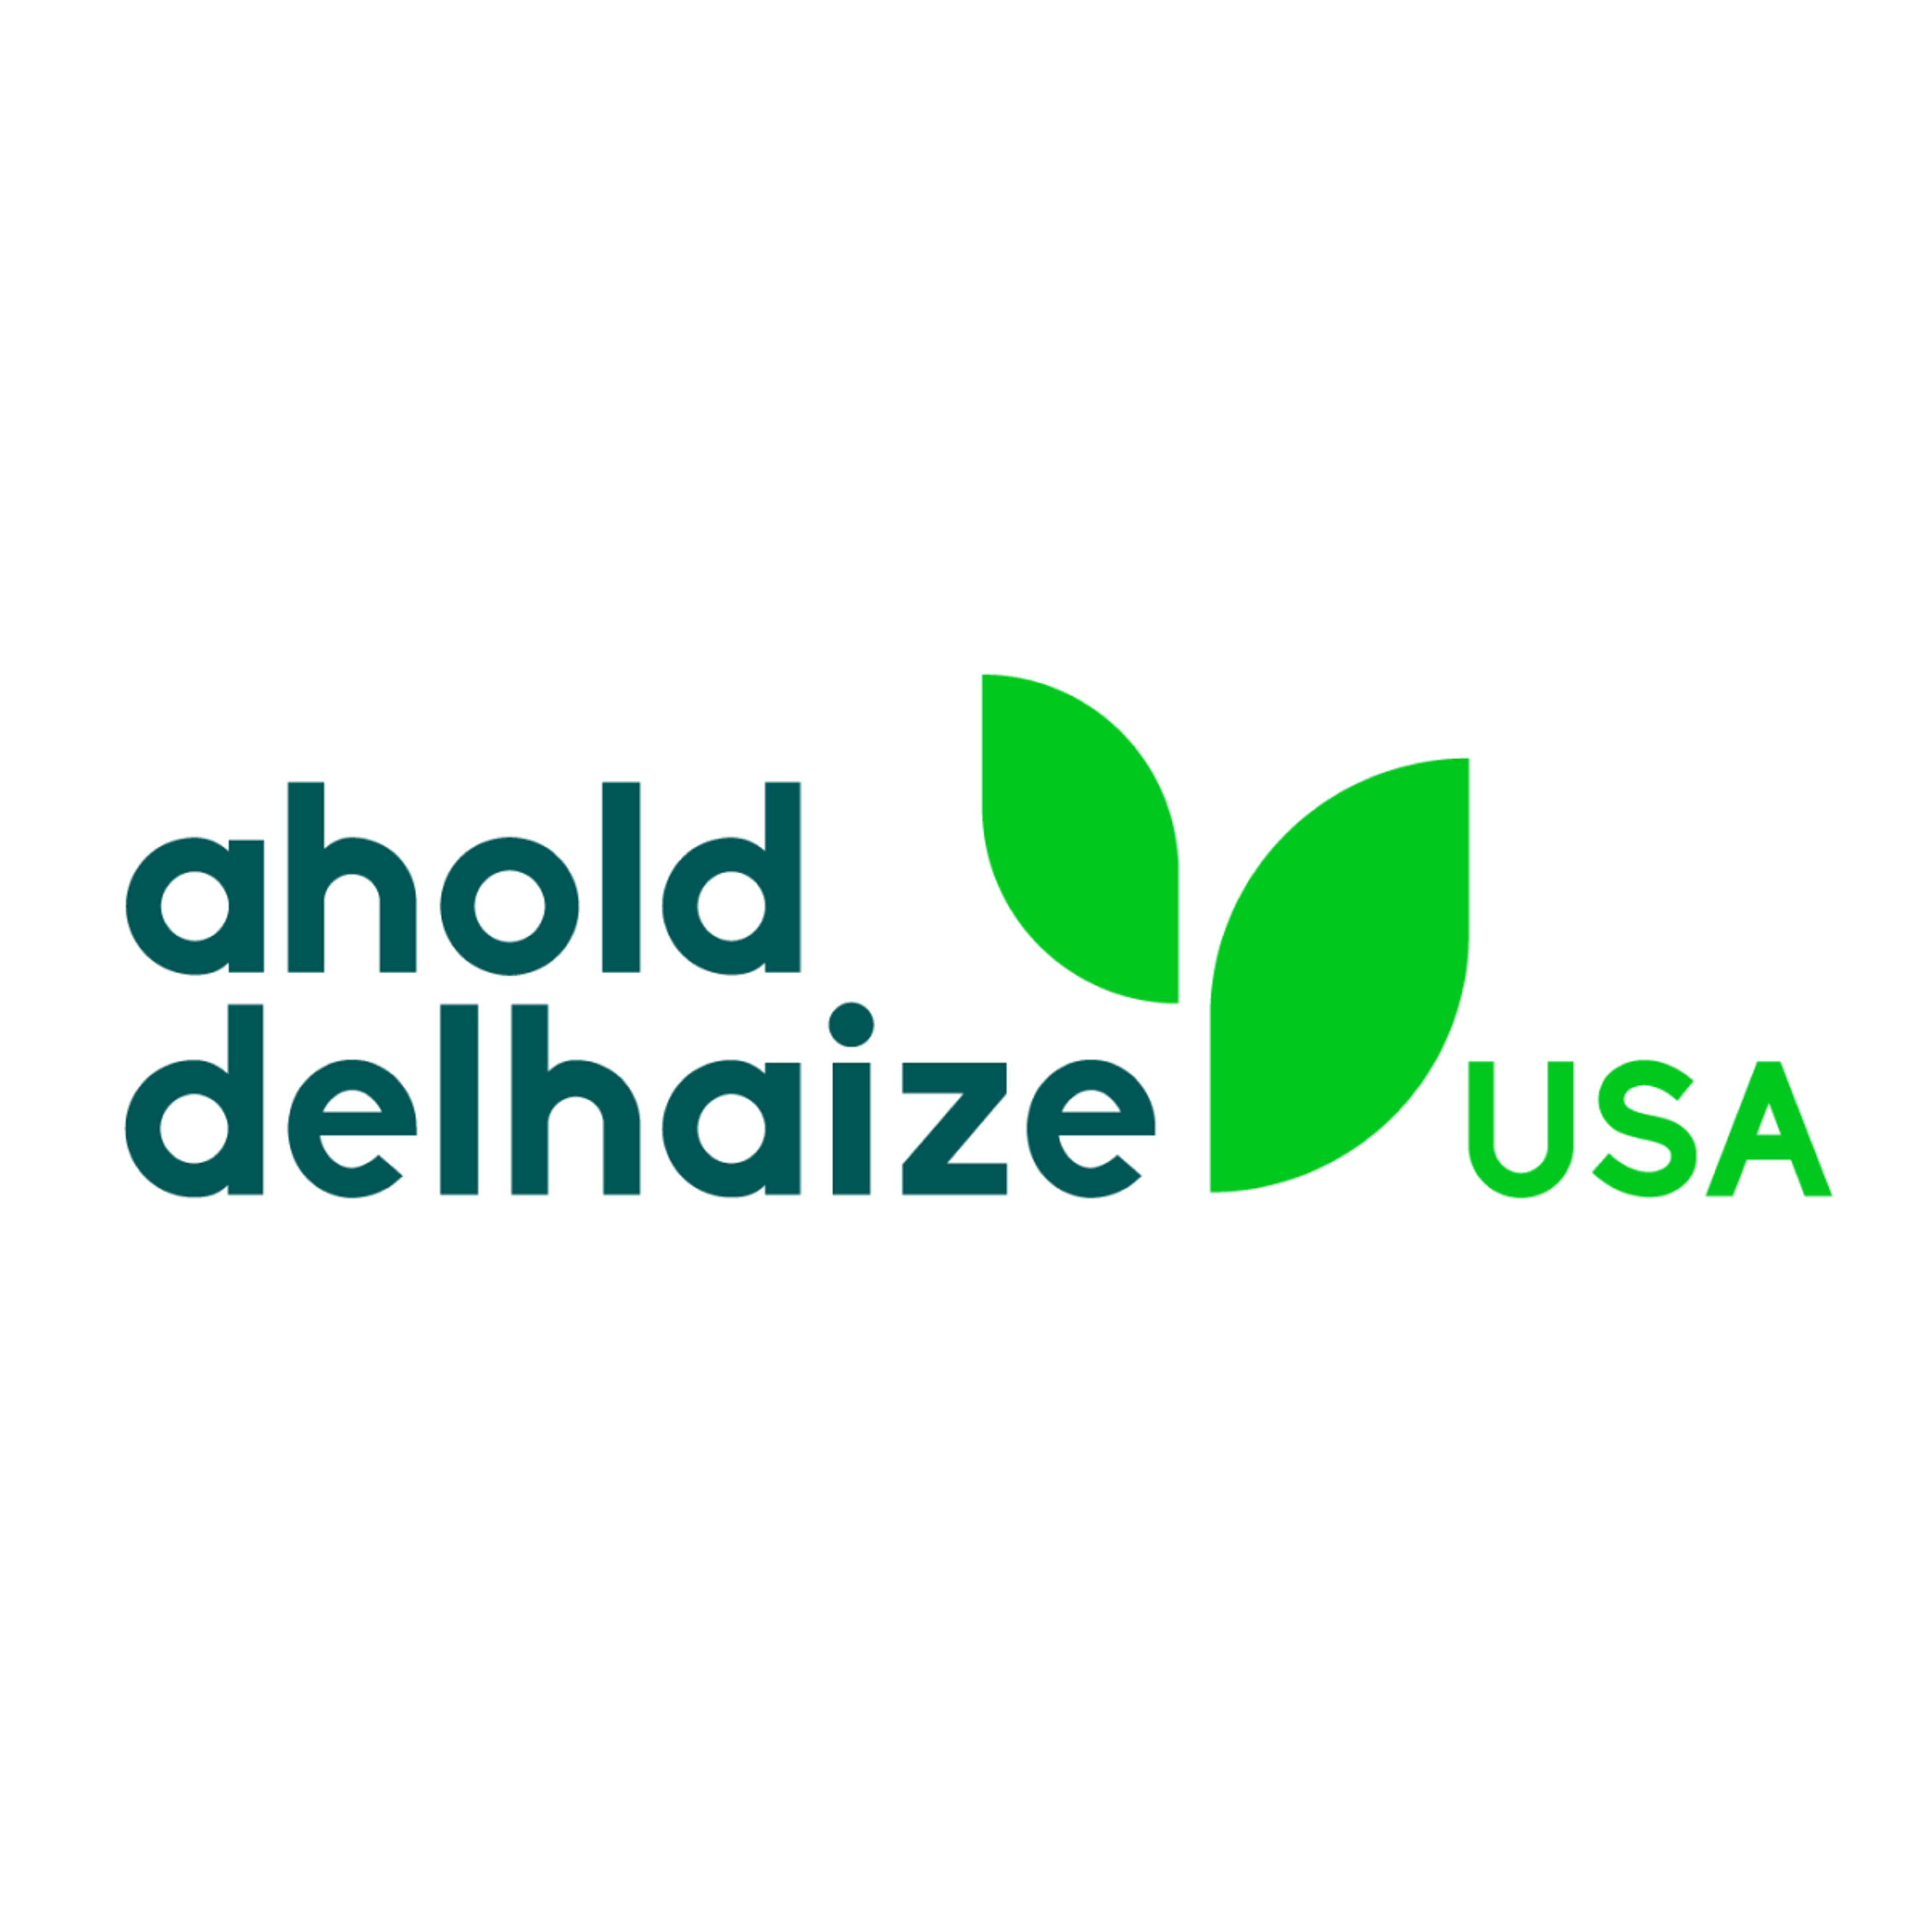 Ahold Delhaize USA